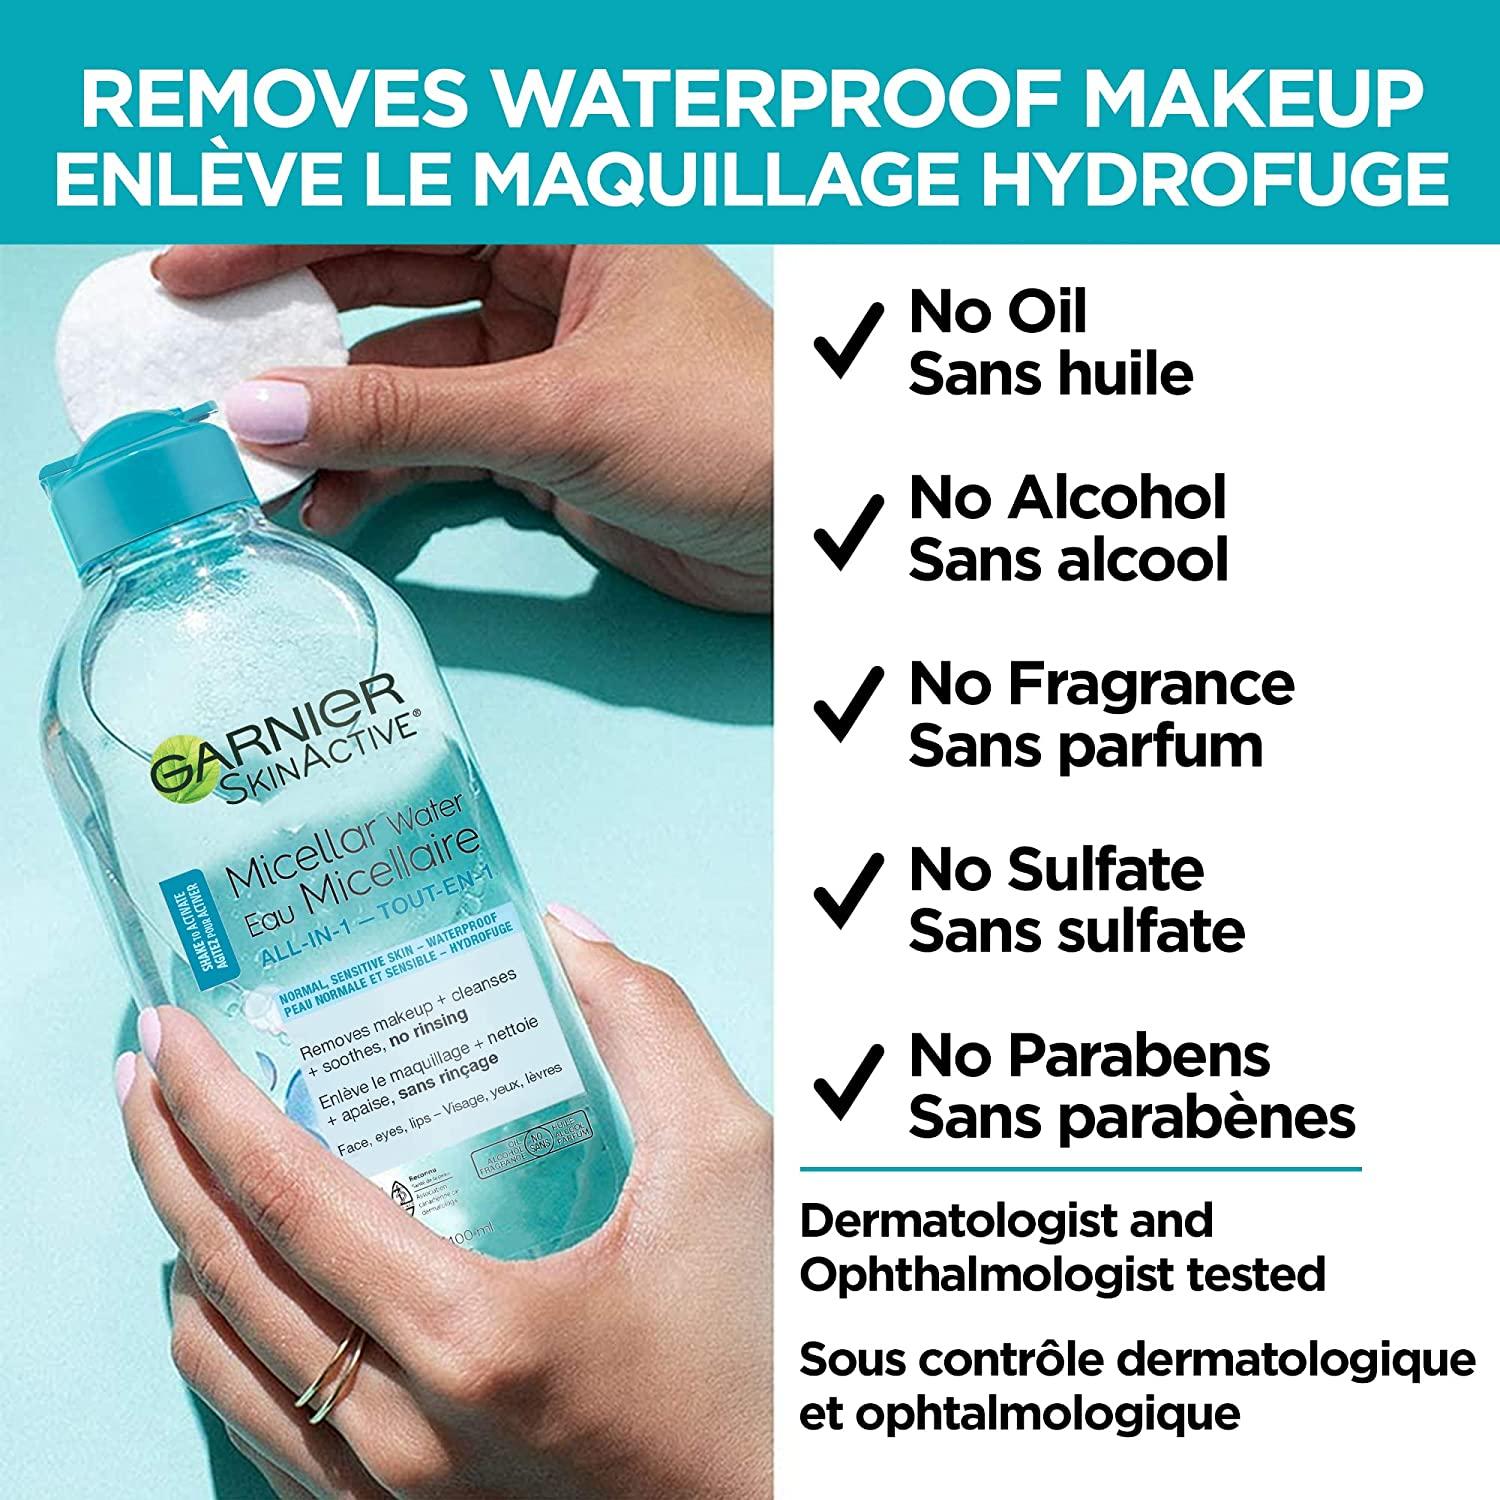 Garnier Skin Active Micellar Cleansing Water 100ml Makeup Remover Sensitive  Skin